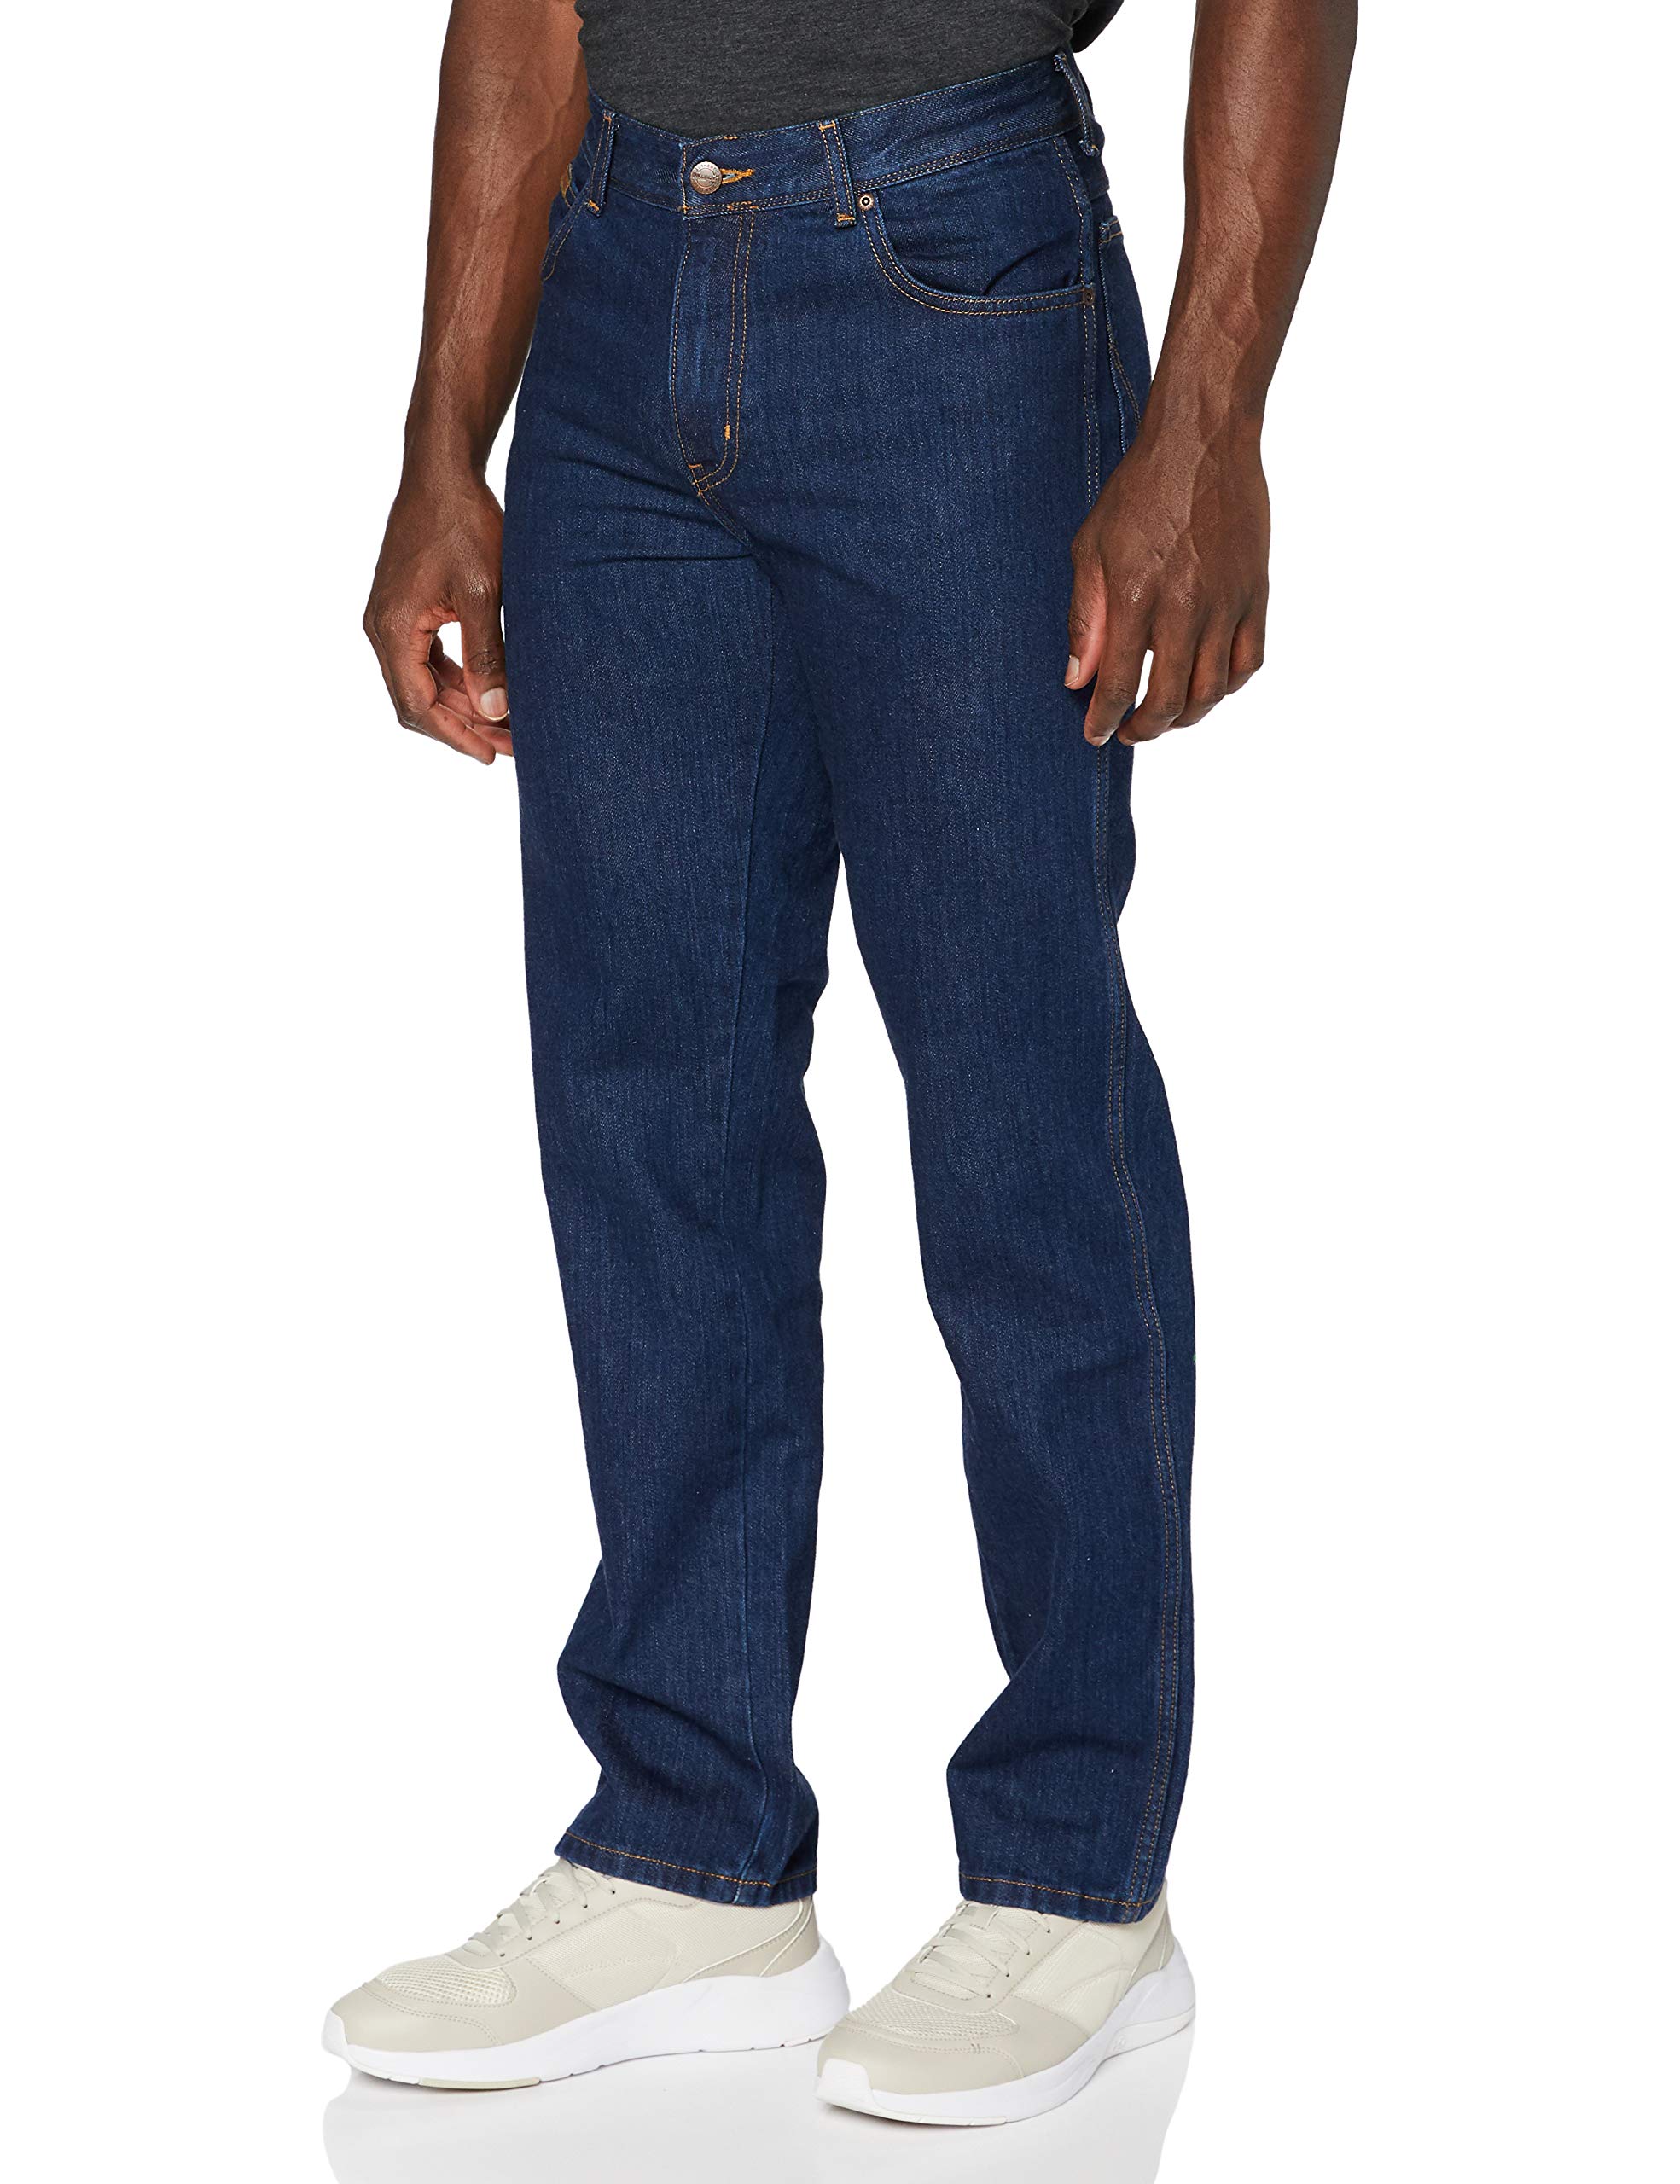 Wrangler Herren Texas 821 Authentic Straight Jeans, Darkstone, 50W / 32L